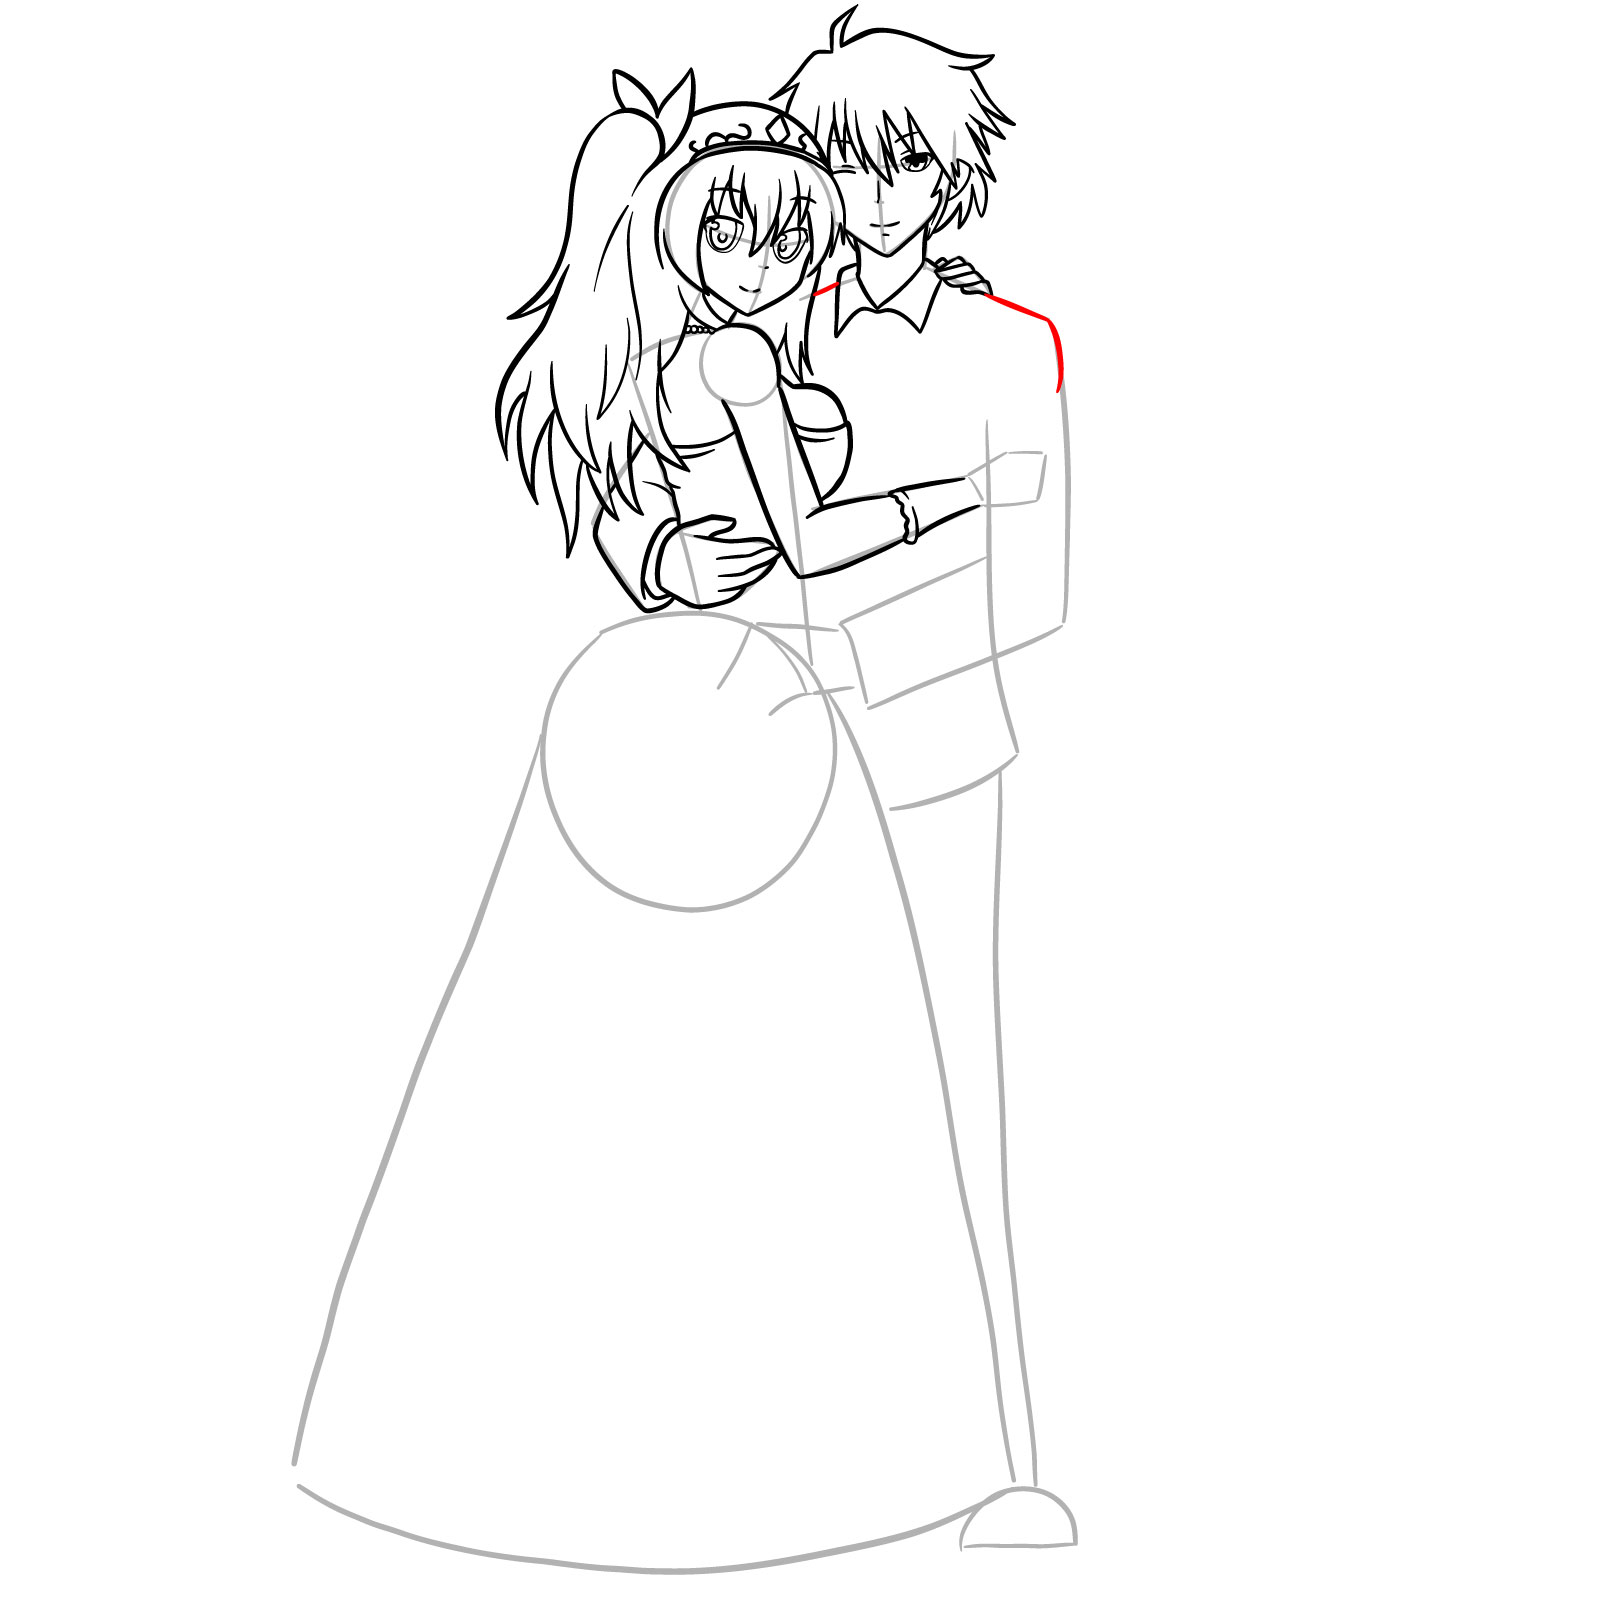 How to draw Ikki and Stella's wedding - step 37